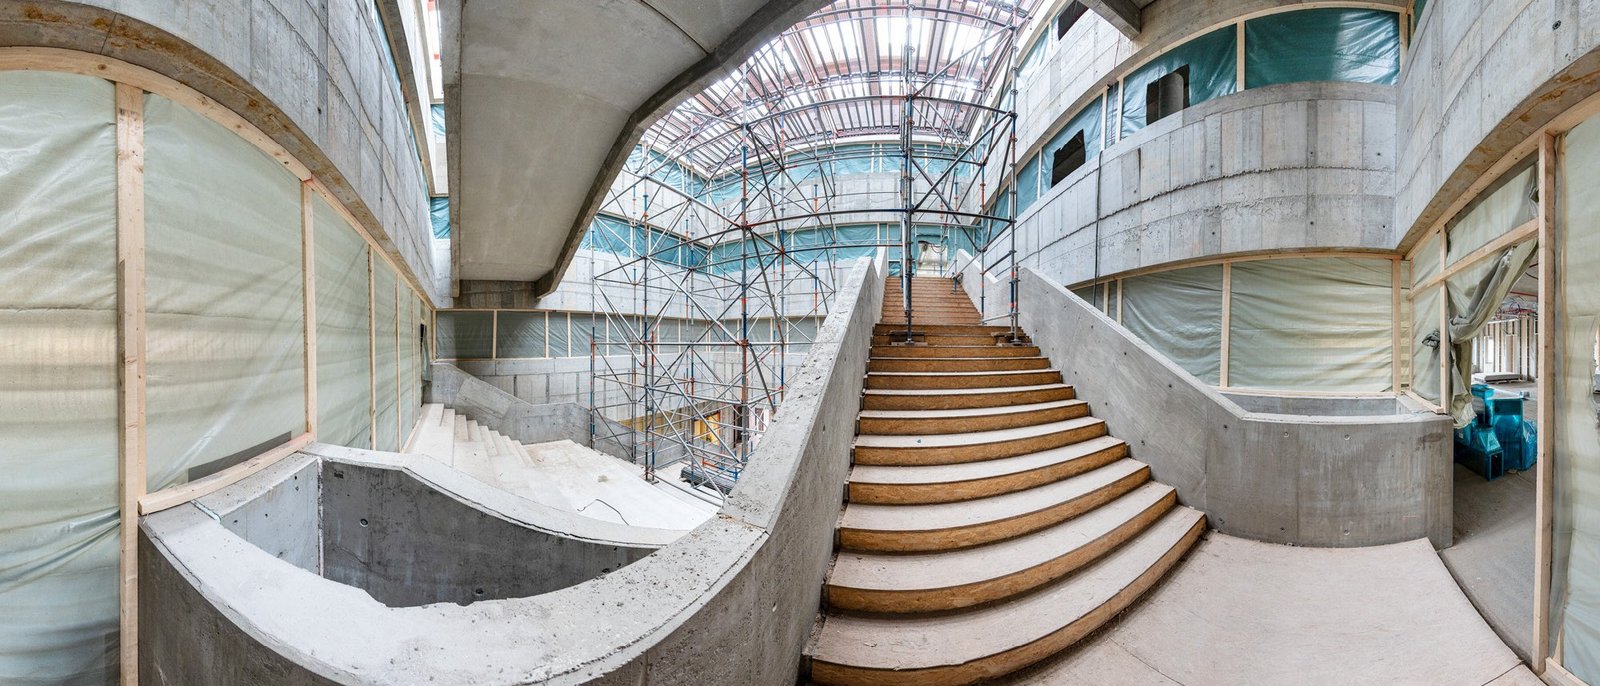 FH Kiel bibliothekarisches Lernzentrum Rohbau Panoramabild Treppe im Atrium. 